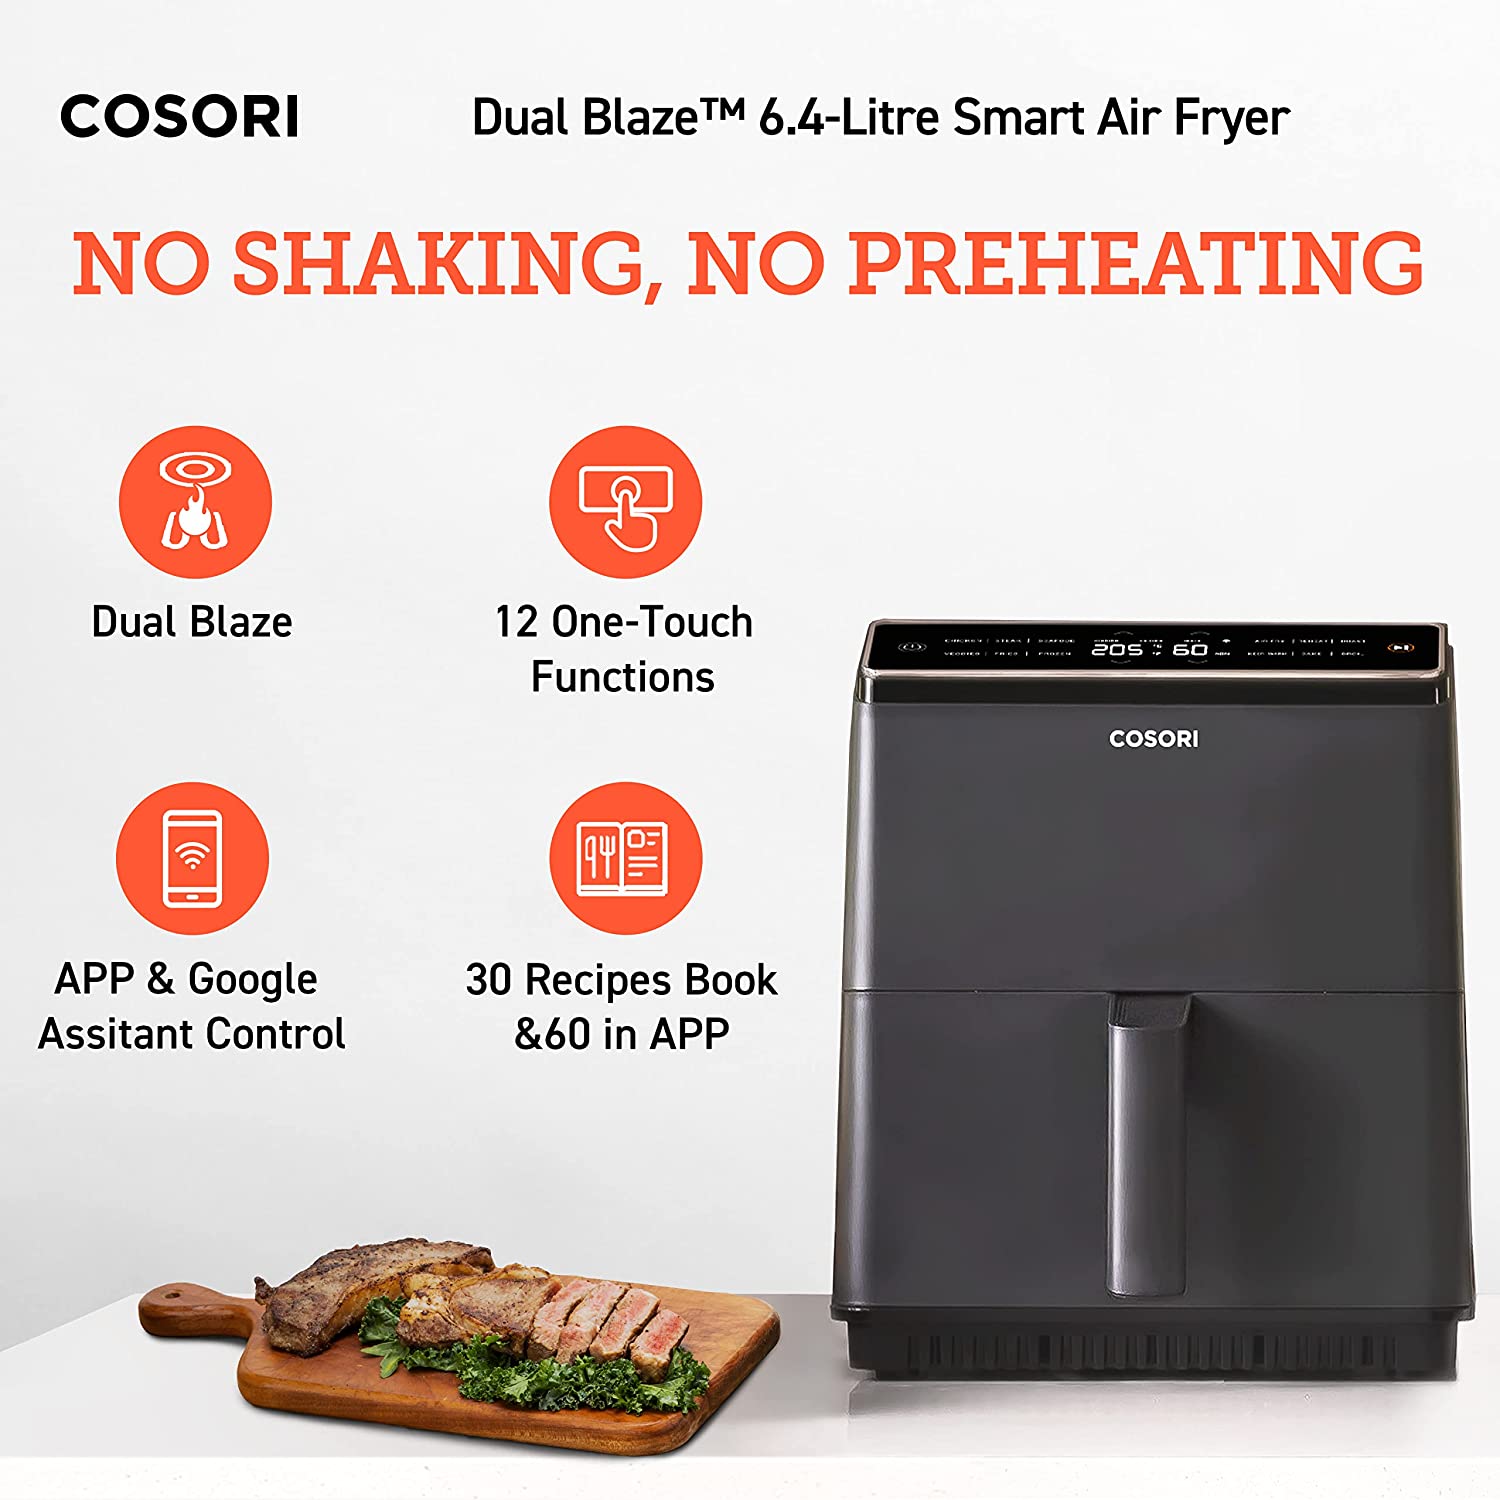 Cosori Dual Blaze 6.4L Smart Air Fryer review - Saga Exceptional